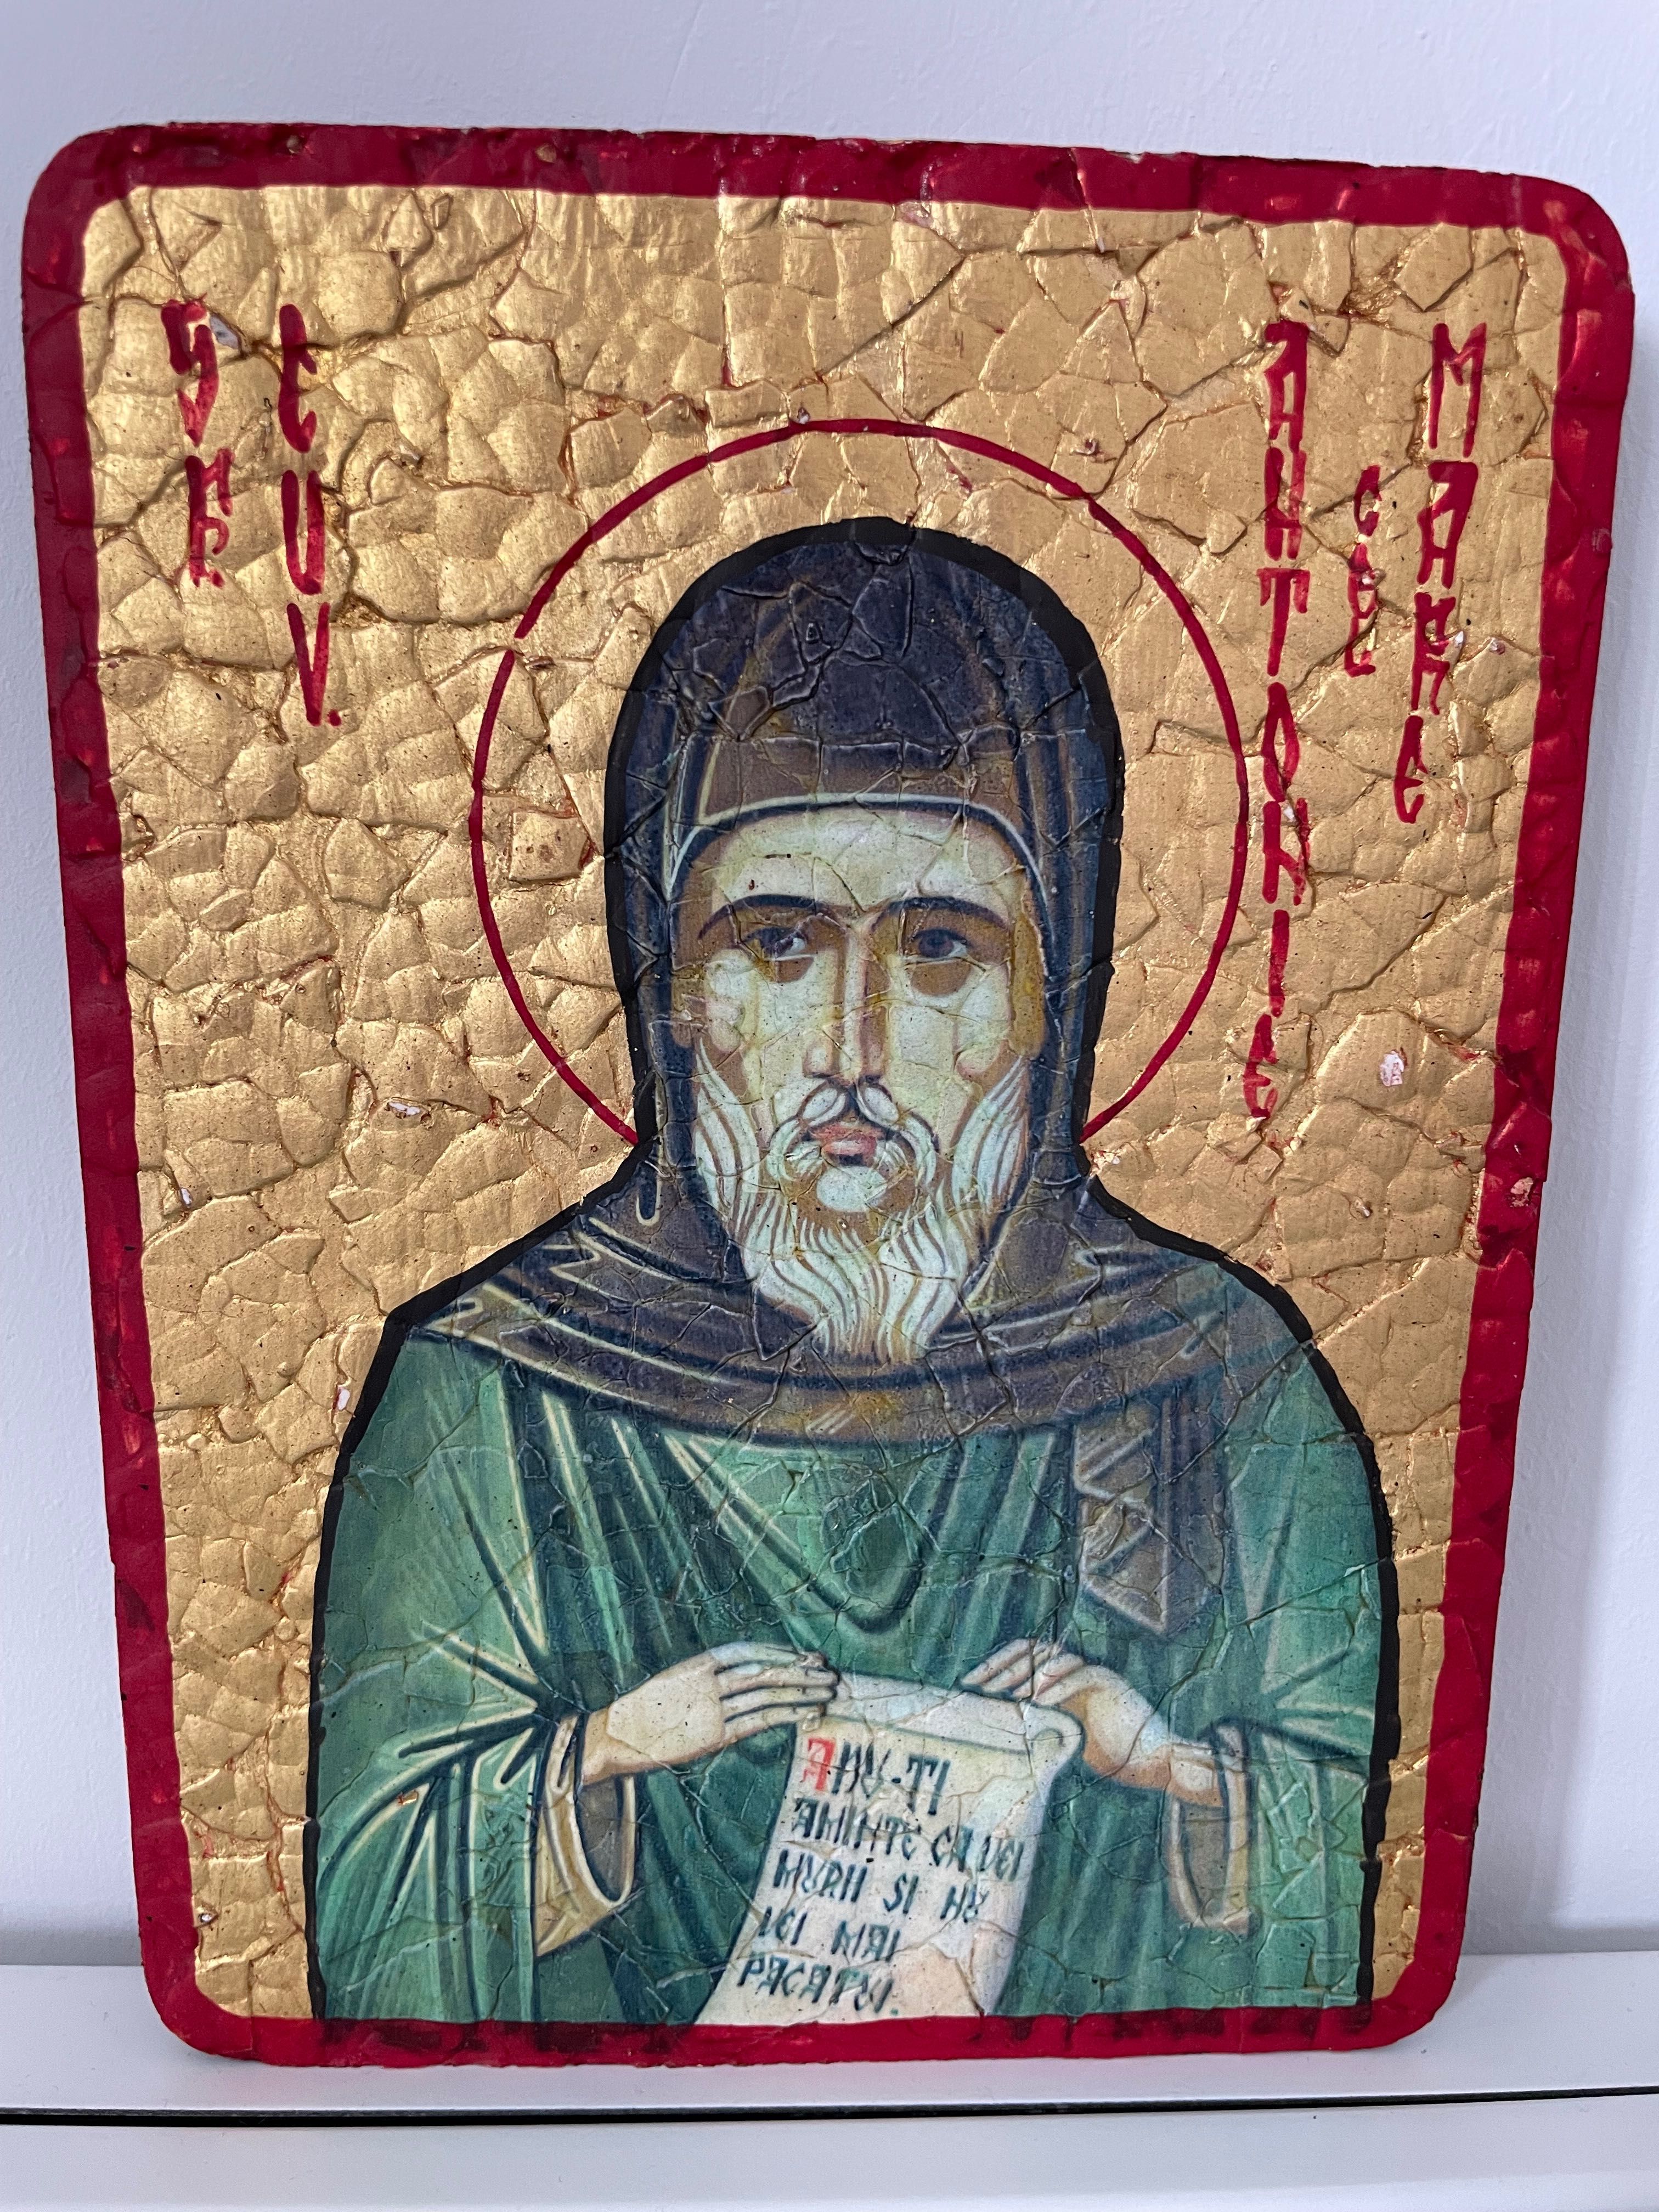 Icoana pictata pe lemn cu Sf. Antonie cel Mare